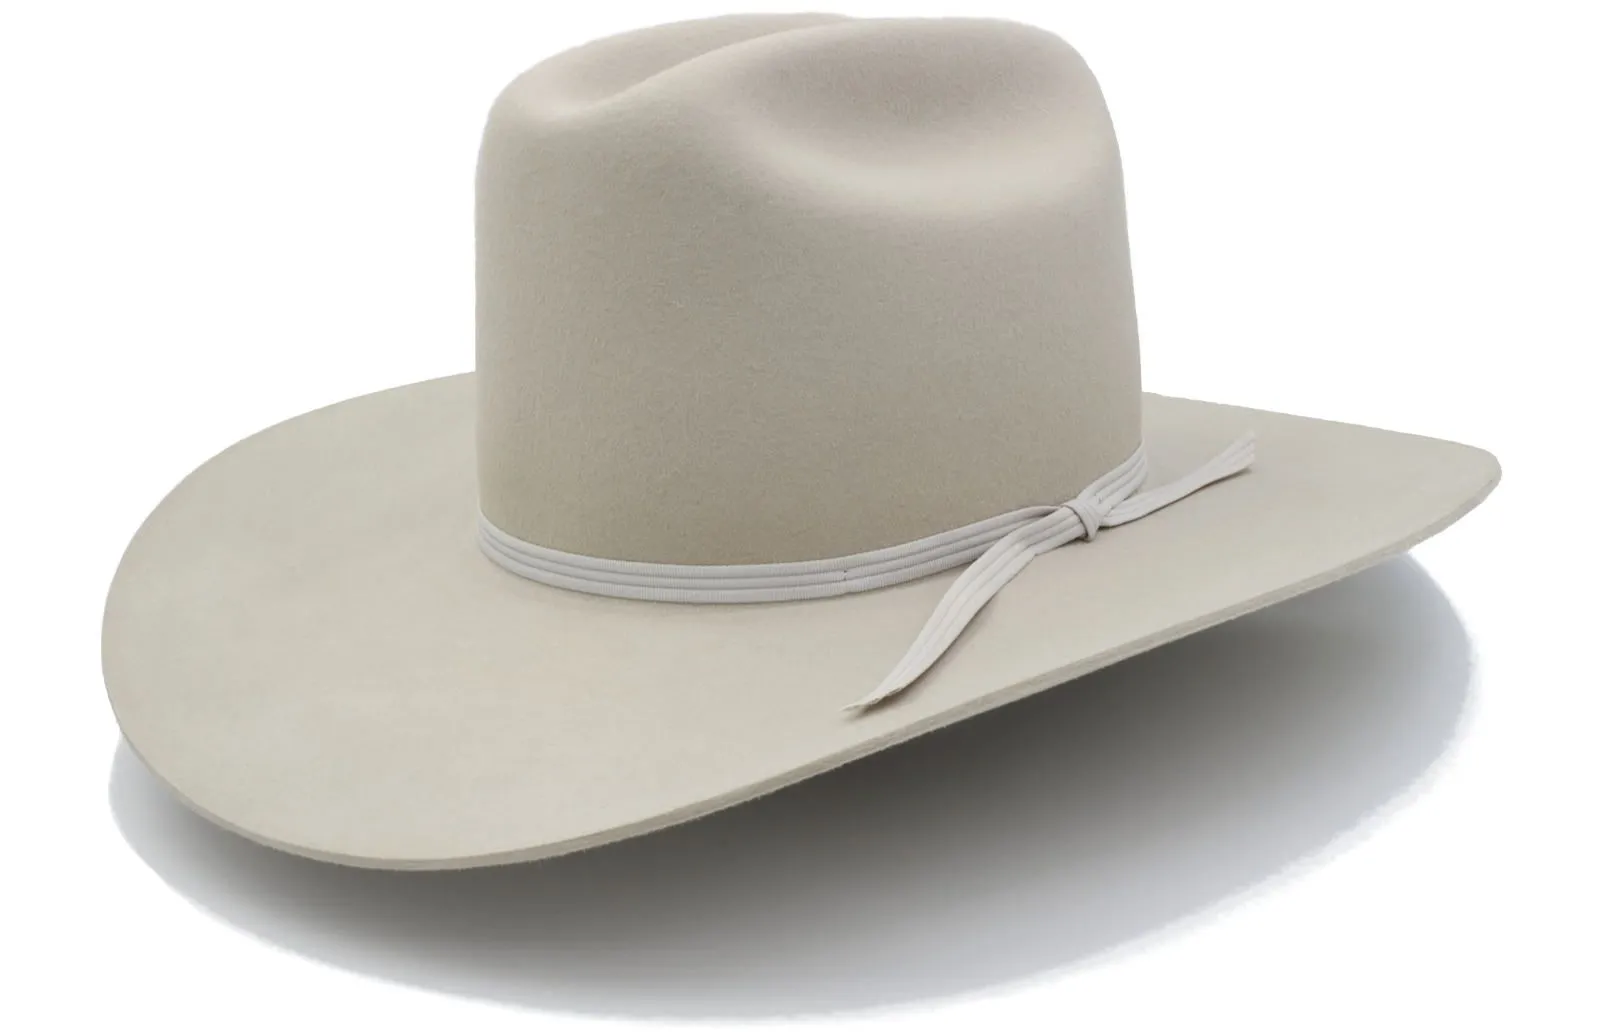 Stratton Hats Western style Felt Hat